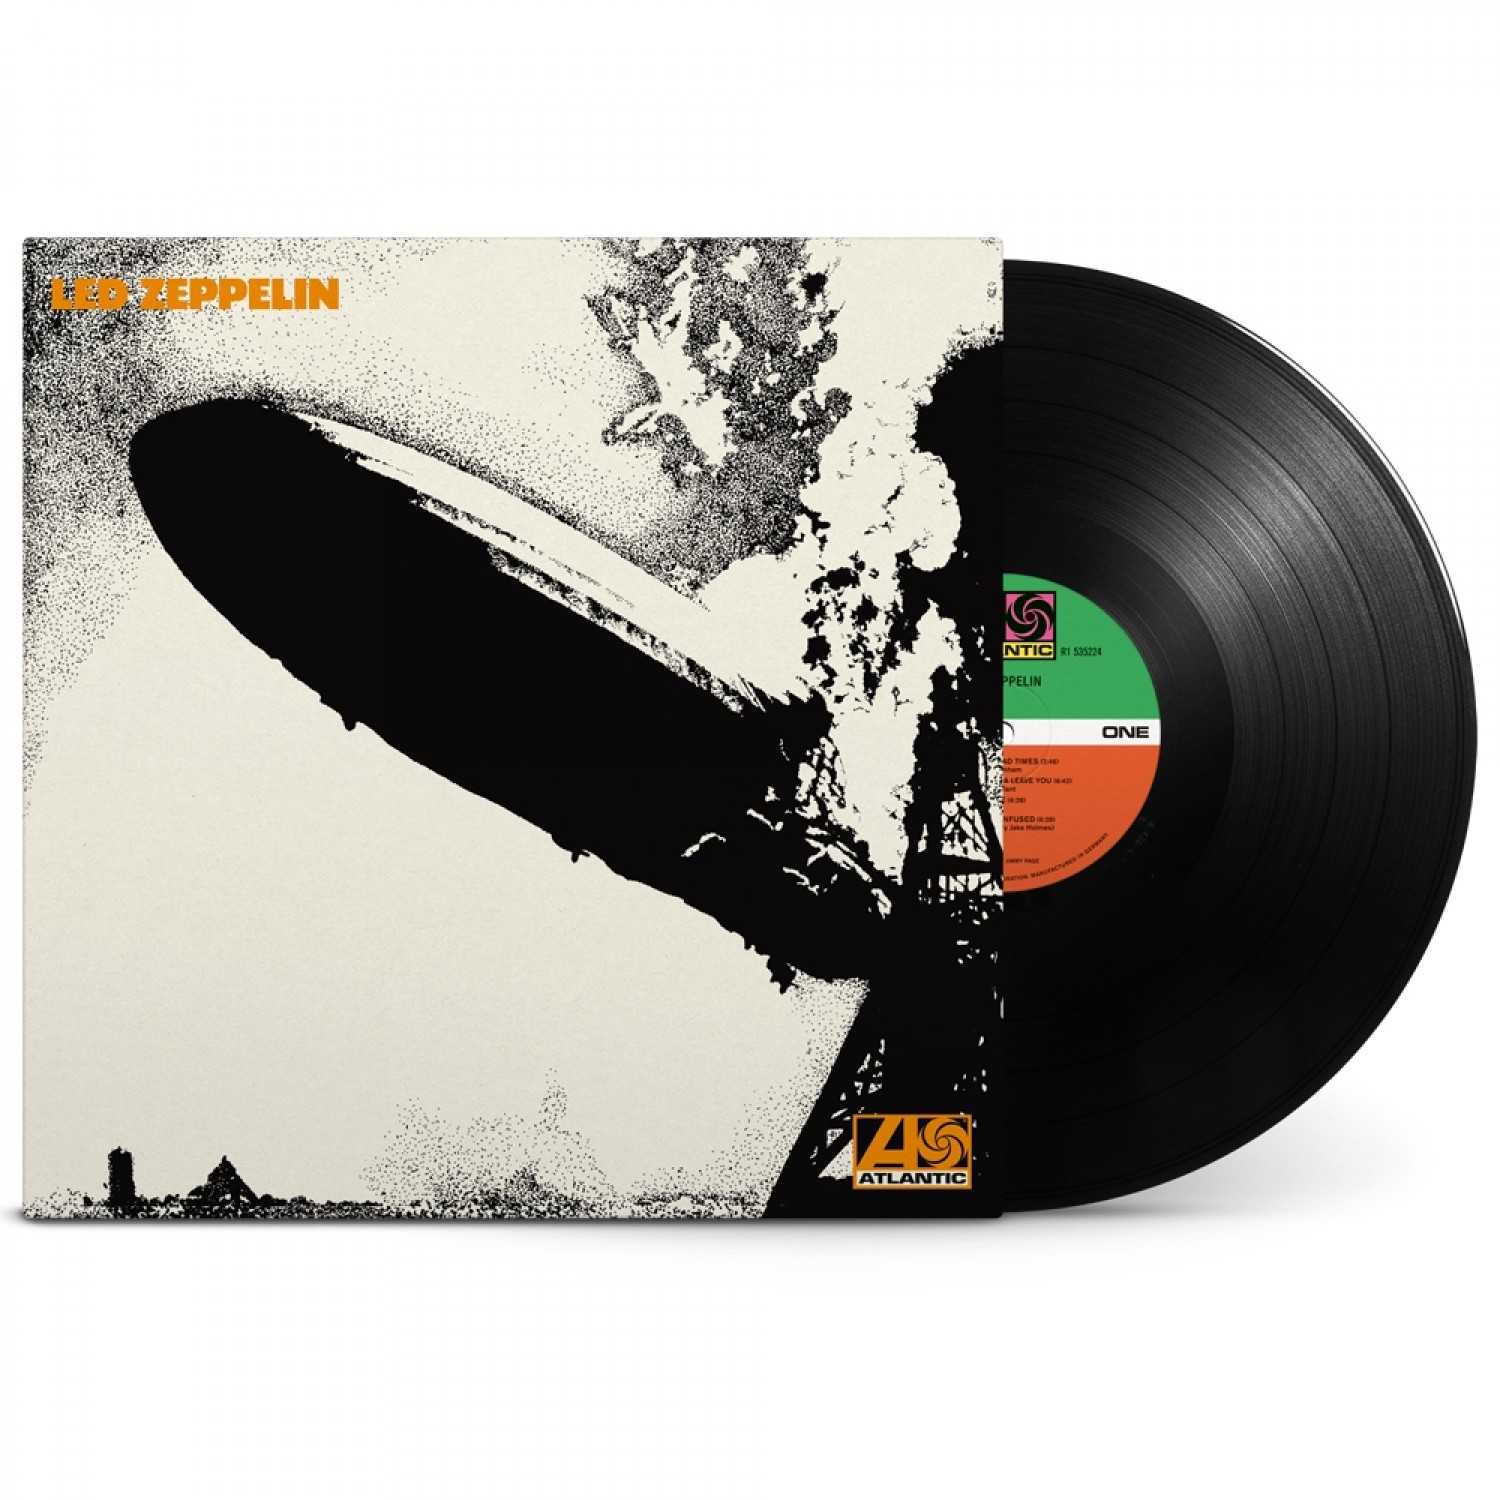 Coda (альбом led zeppelin)